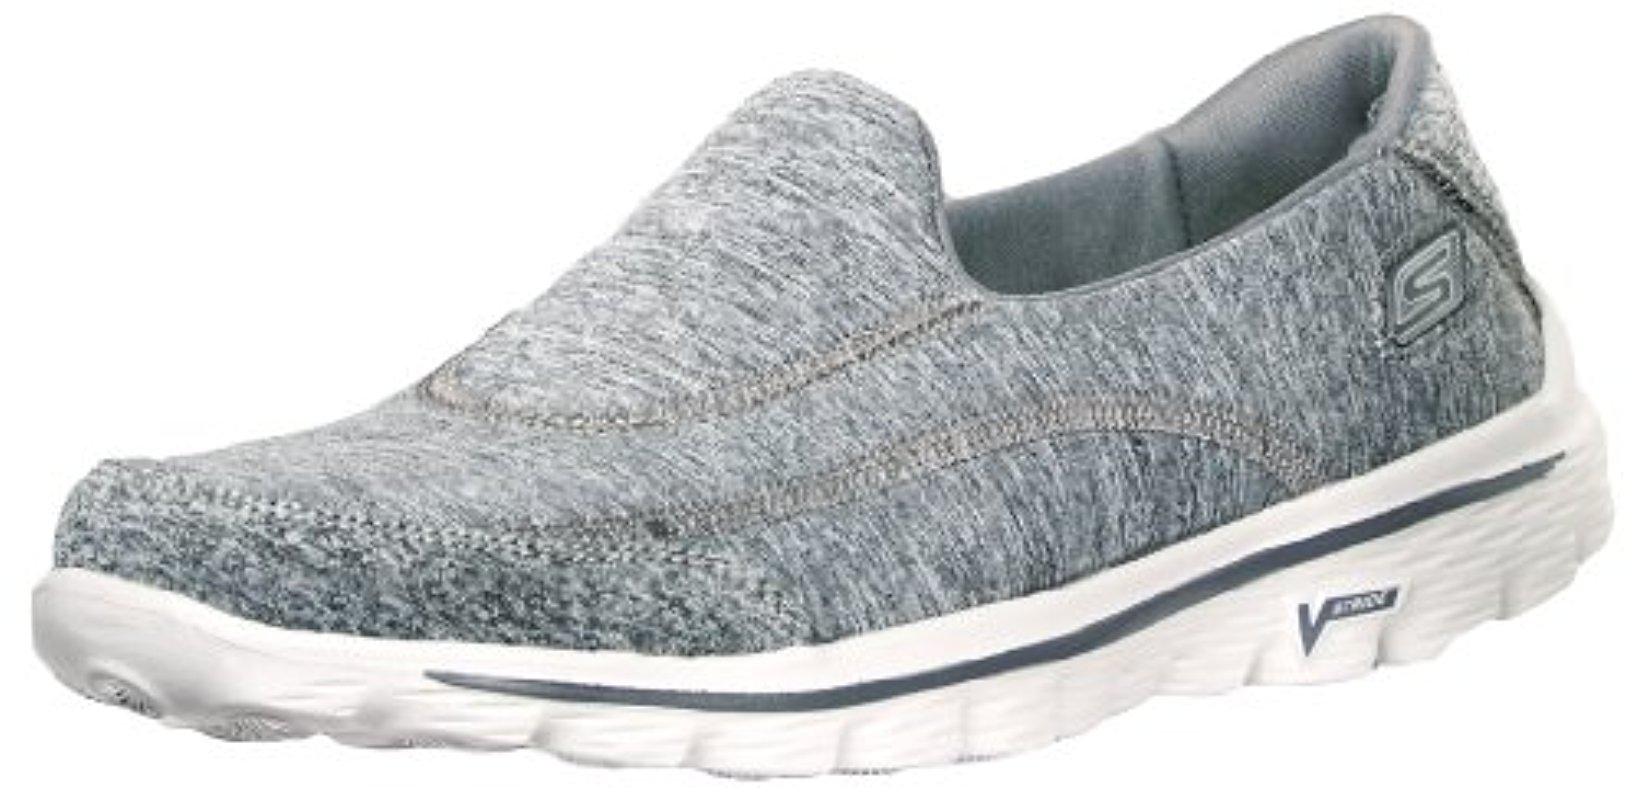 Skechers Synthetic Performance Go Walk 2 Slip-on Walking Shoe in Heather  Grey (Gray) - Save 52% | Lyst